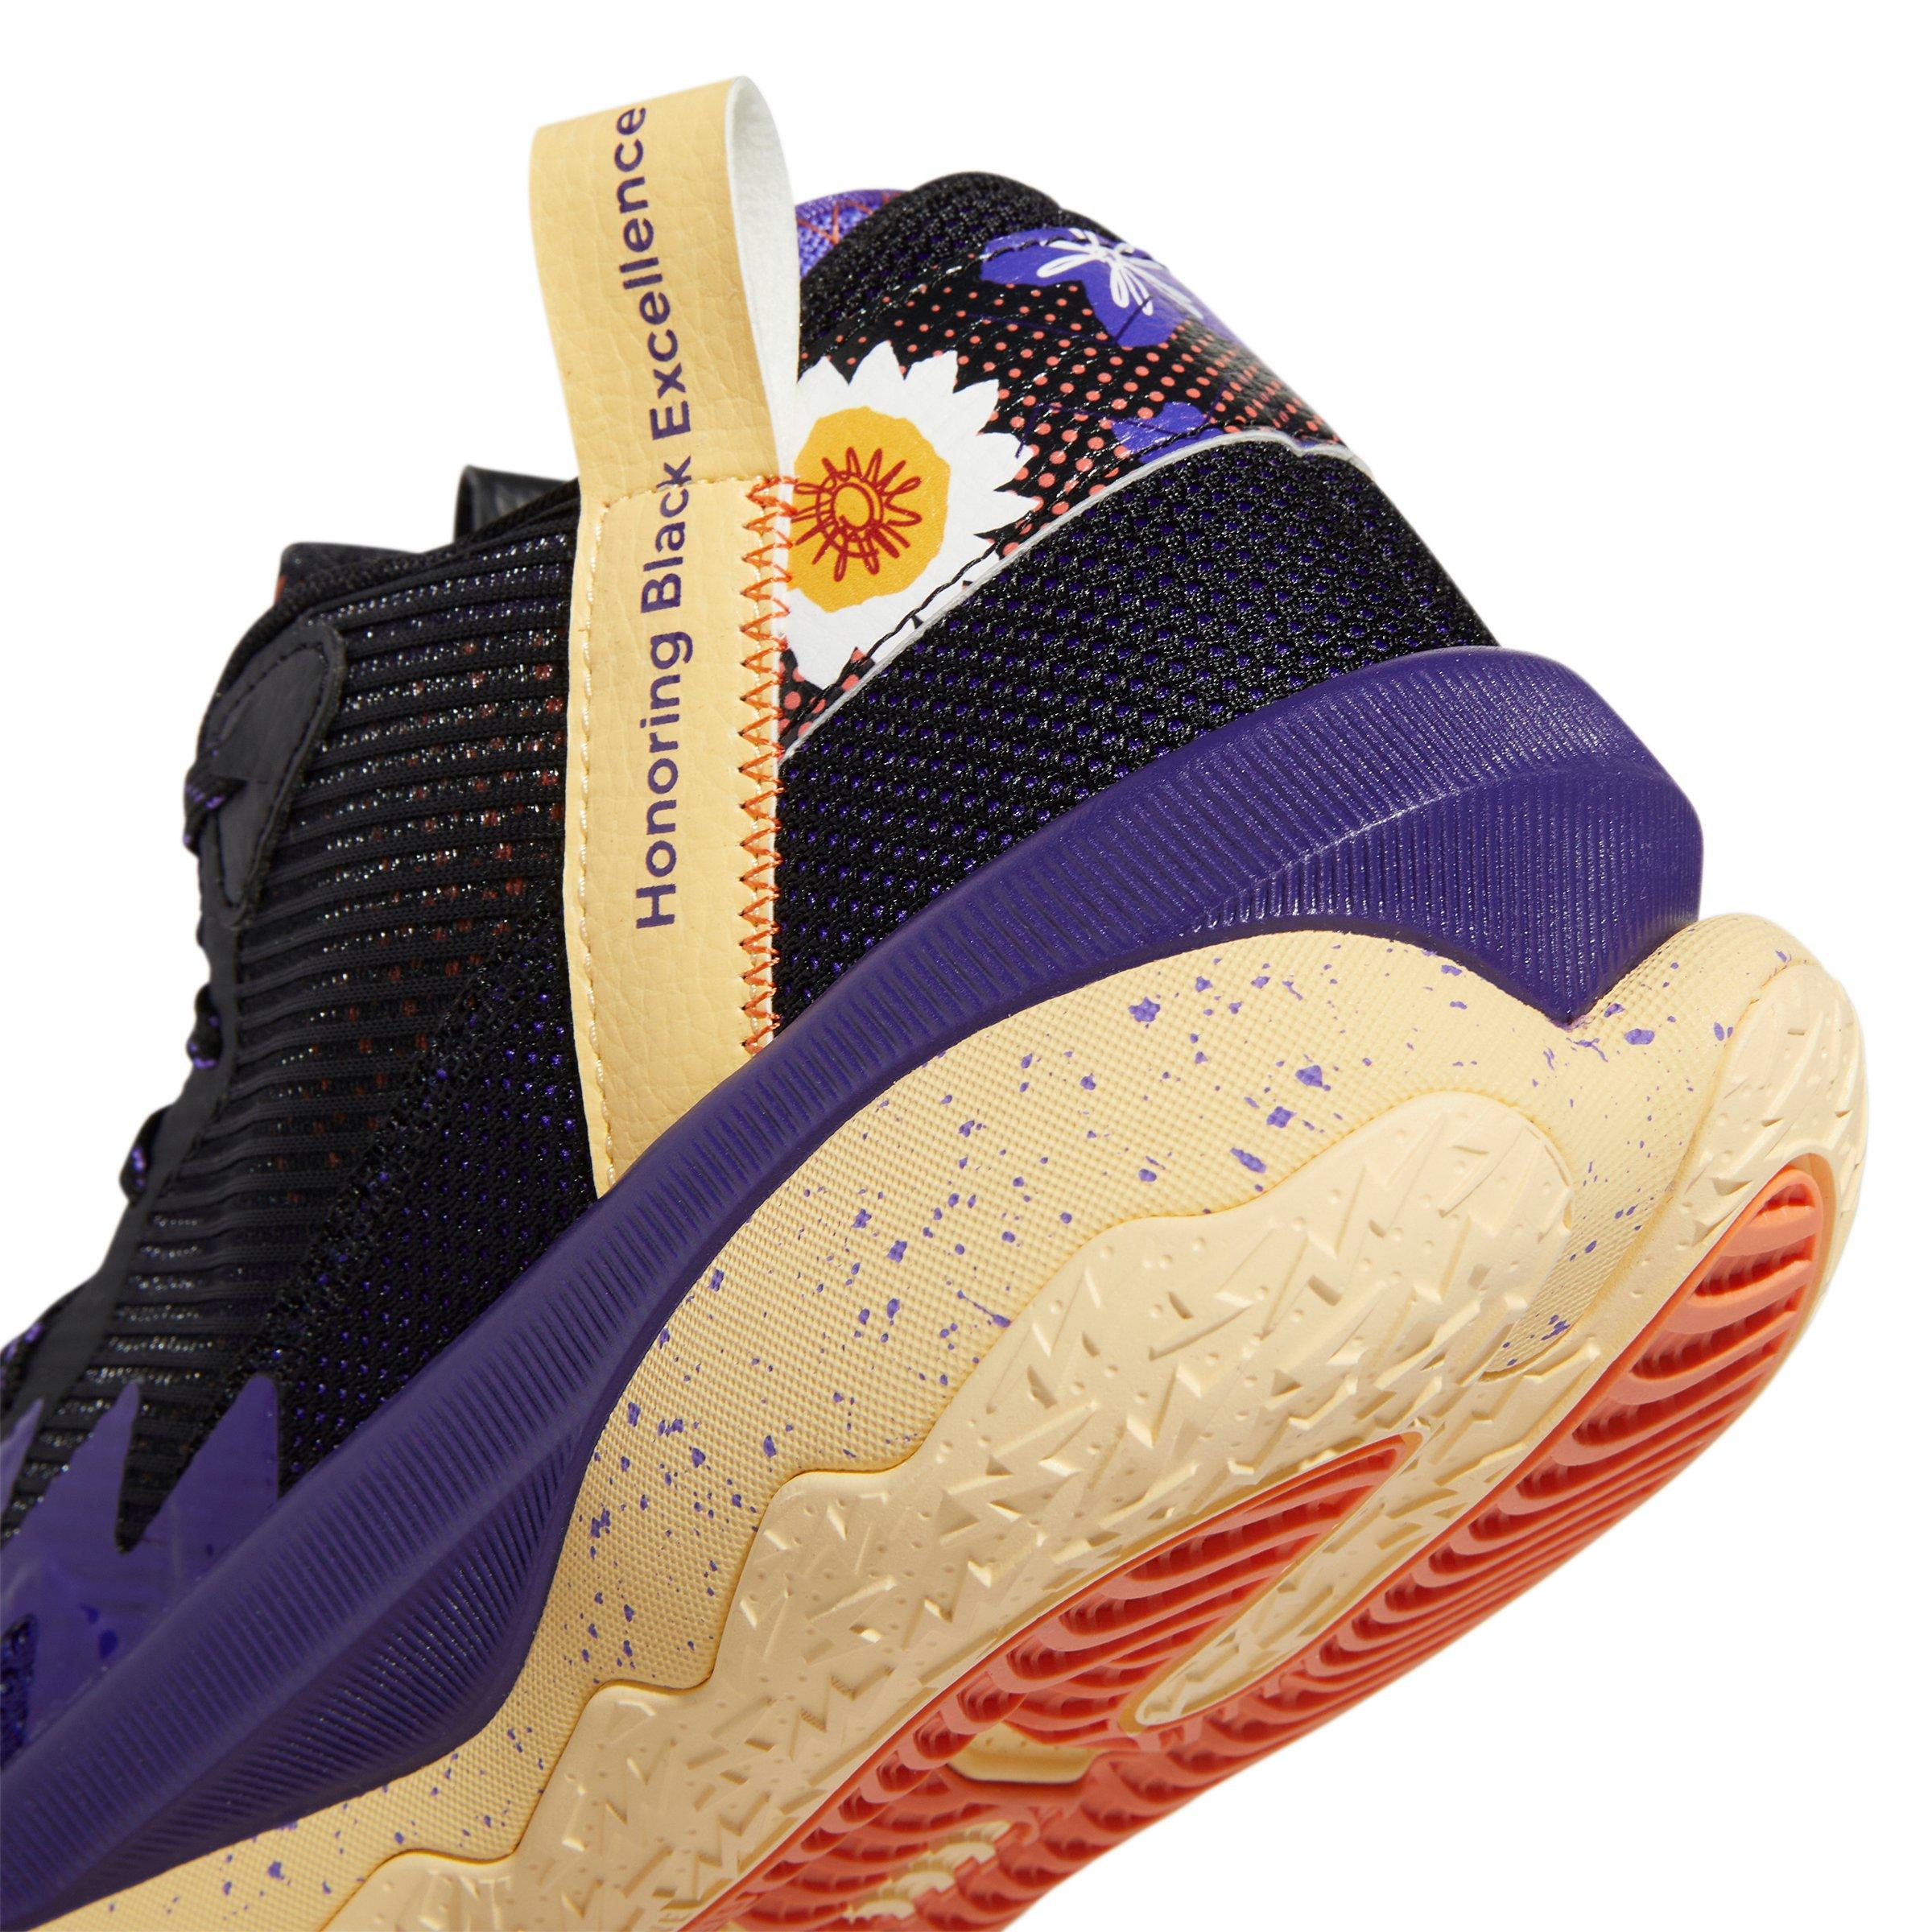 adidas Dame 8 "Purple/Black/Orange" Men's Basketball Shoe - Hibbett City Gear